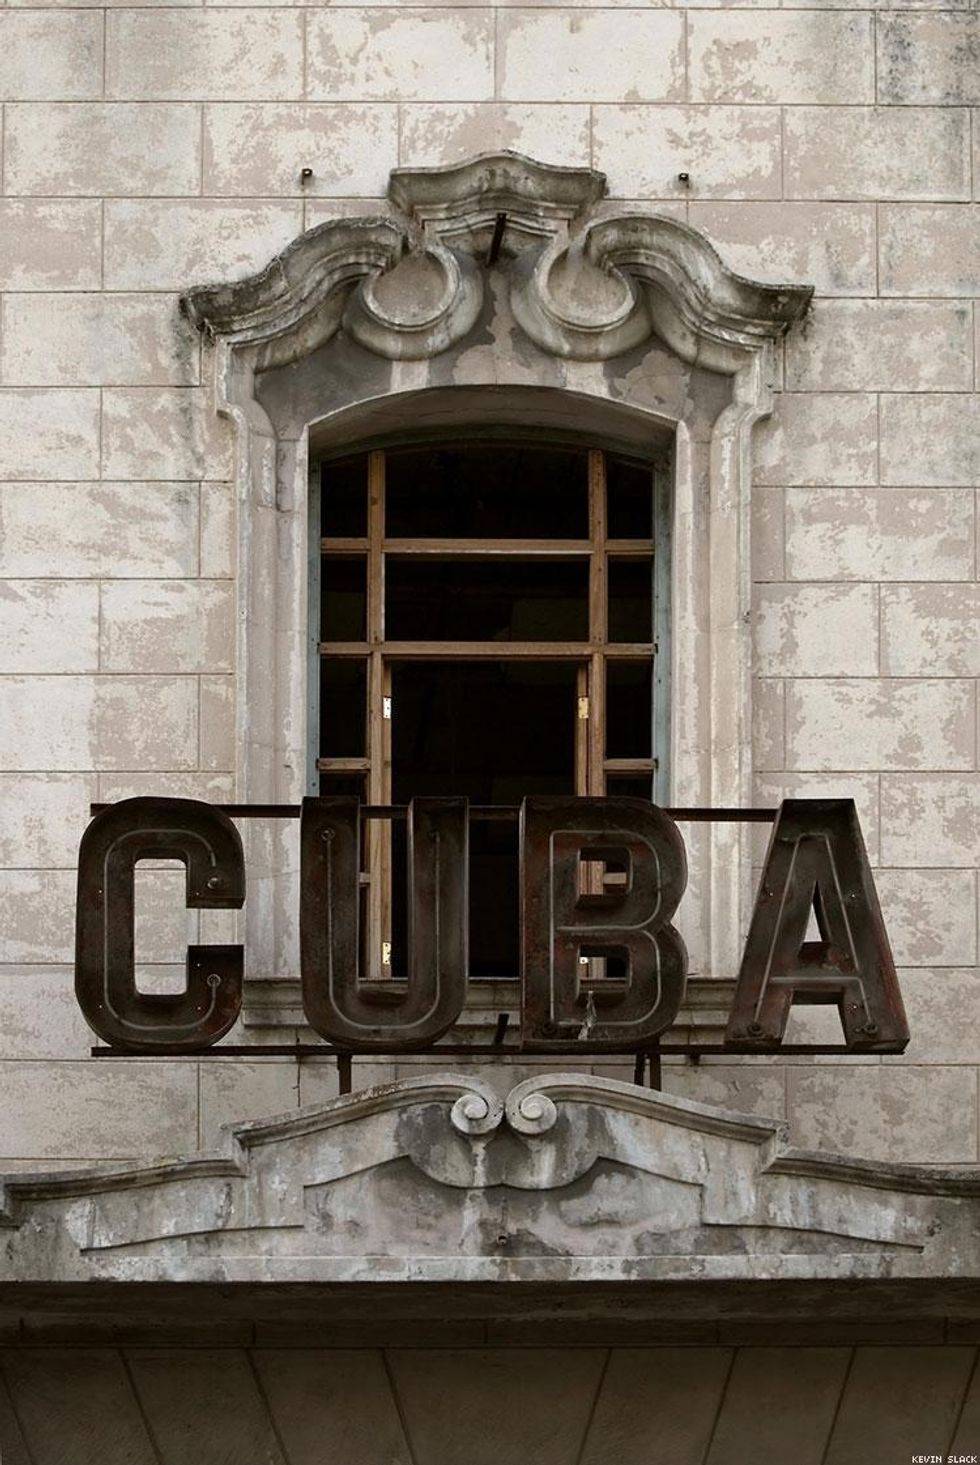 Cuba by Kevin Slack